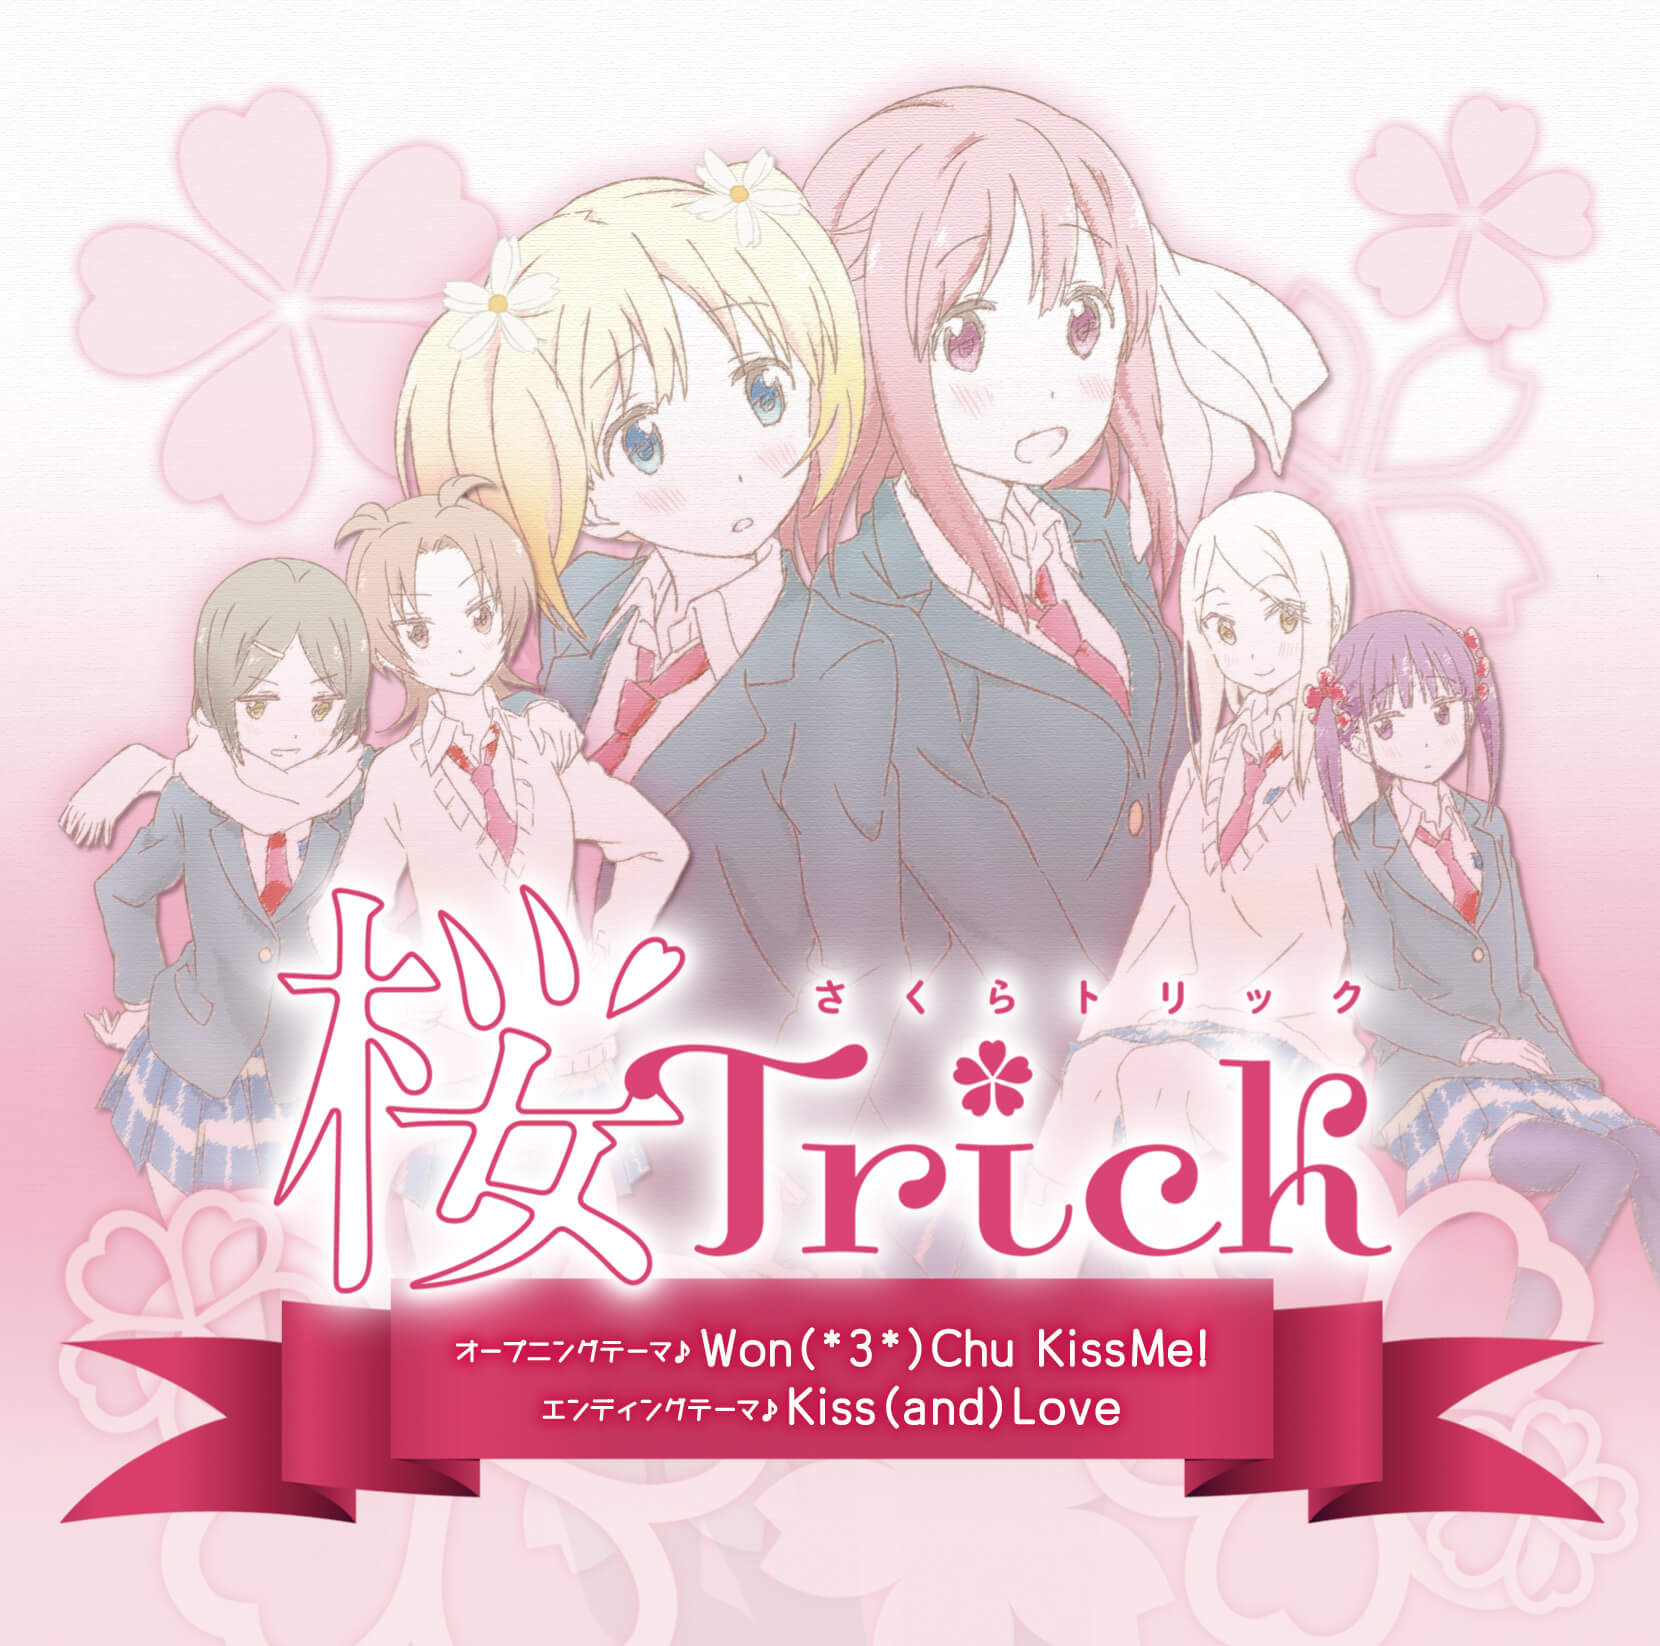 %e6%a1%9ctrick-sakura-trick-anime-download